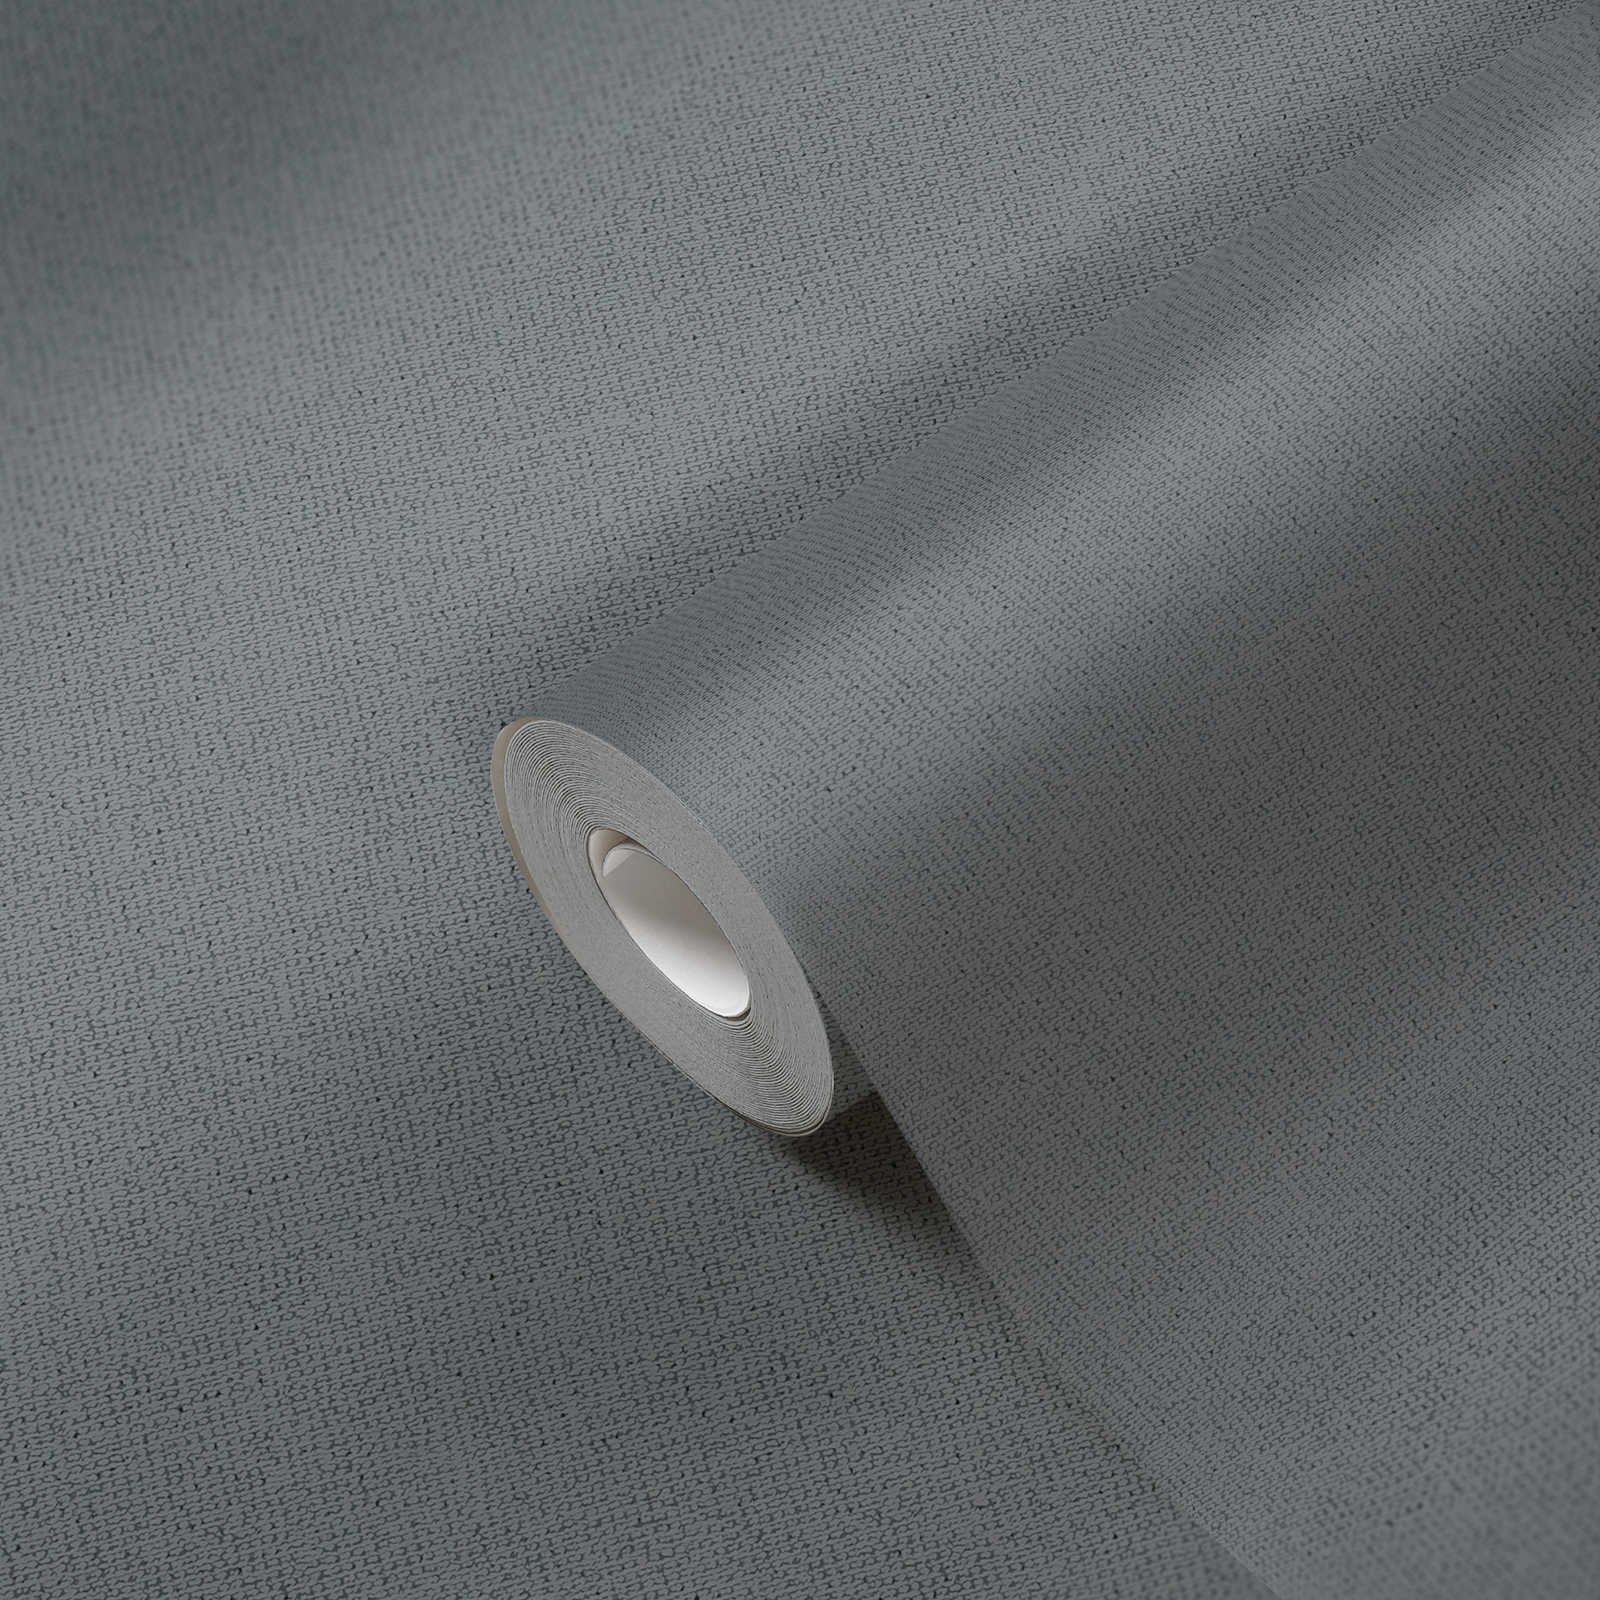             Papel pintado escandinavo liso en estructura mate y lino - gris oscuro
        